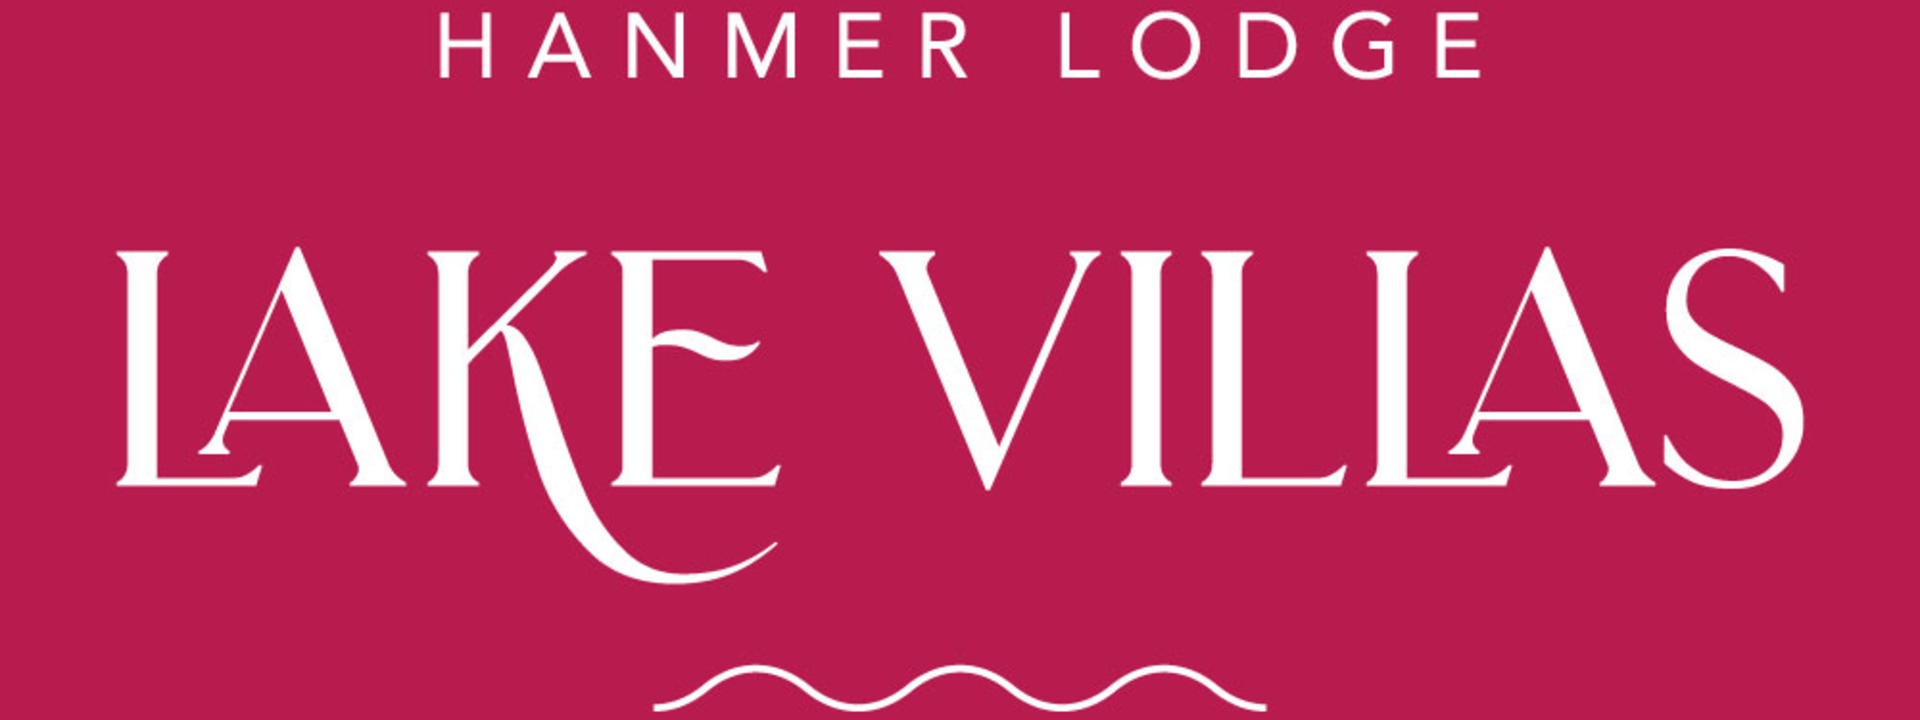 1000px-hanmer-lodge-lake-villas-logo_pink_bg.jpg